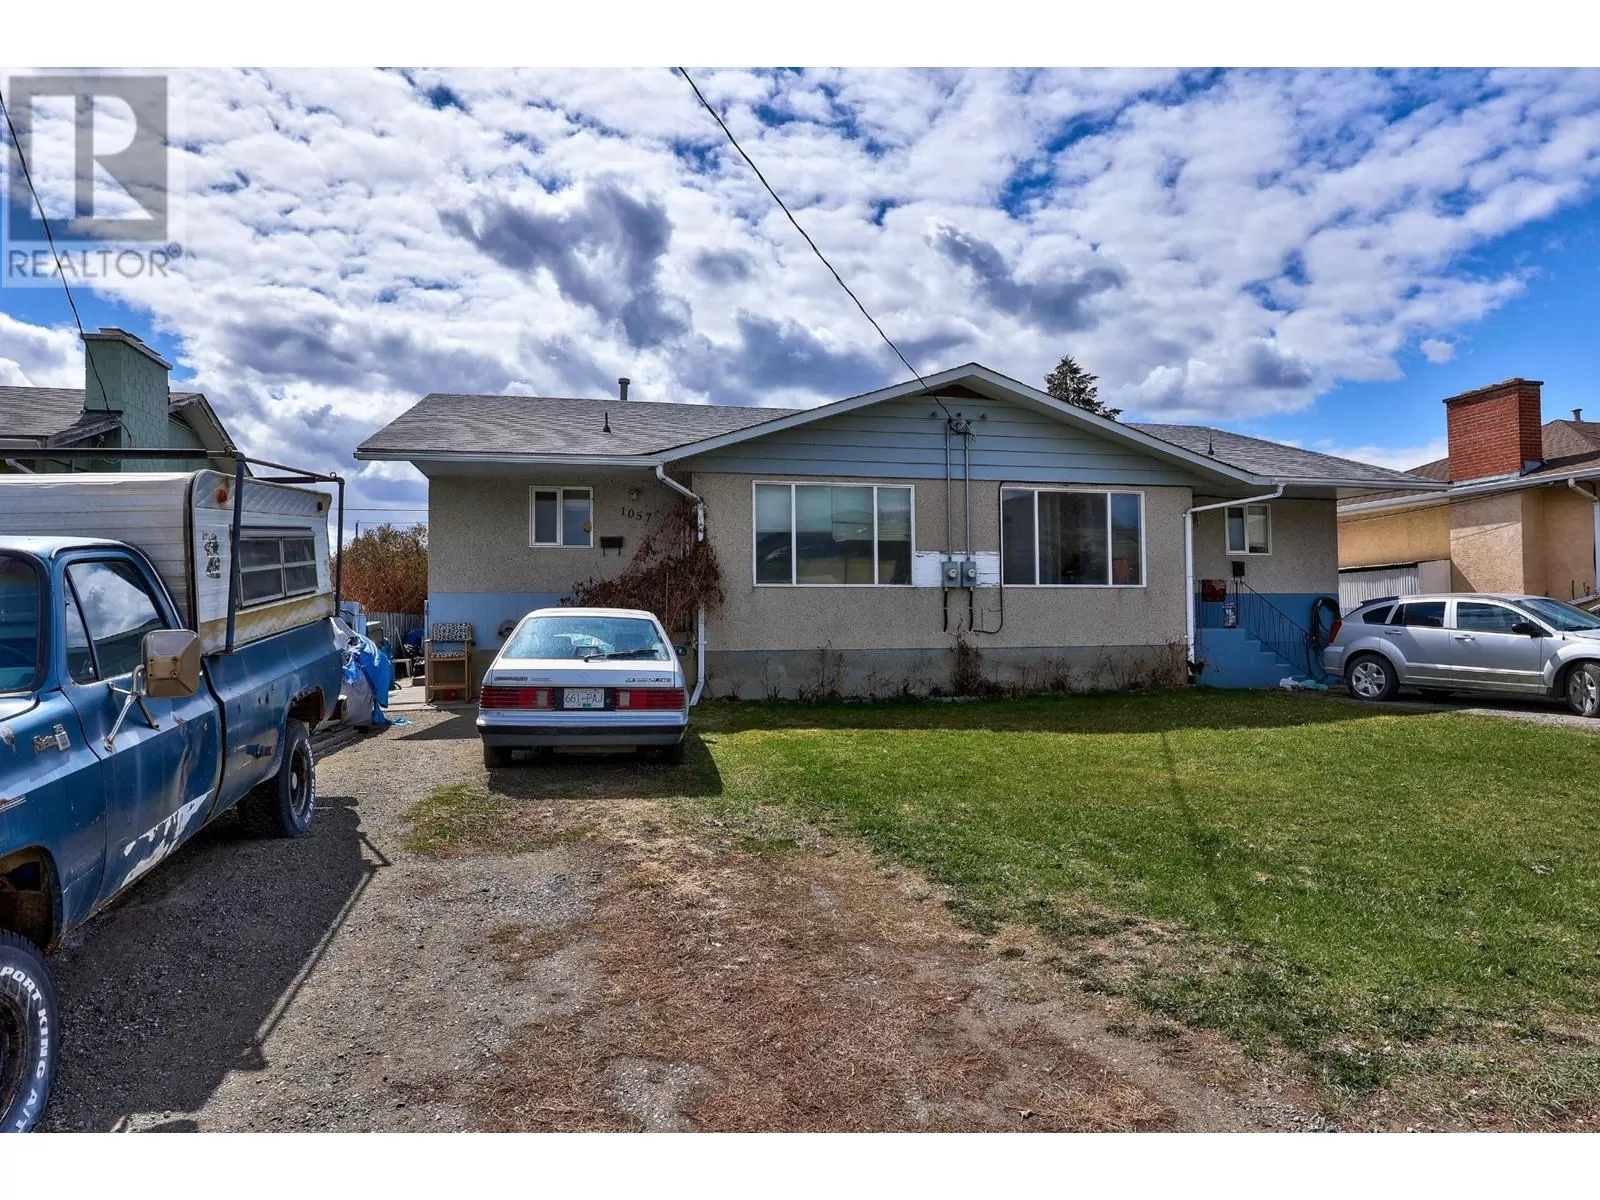 Duplex for rent: 1057/1059 Lethbridge Ave, Kamloops, British Columbia V2B 1Y1